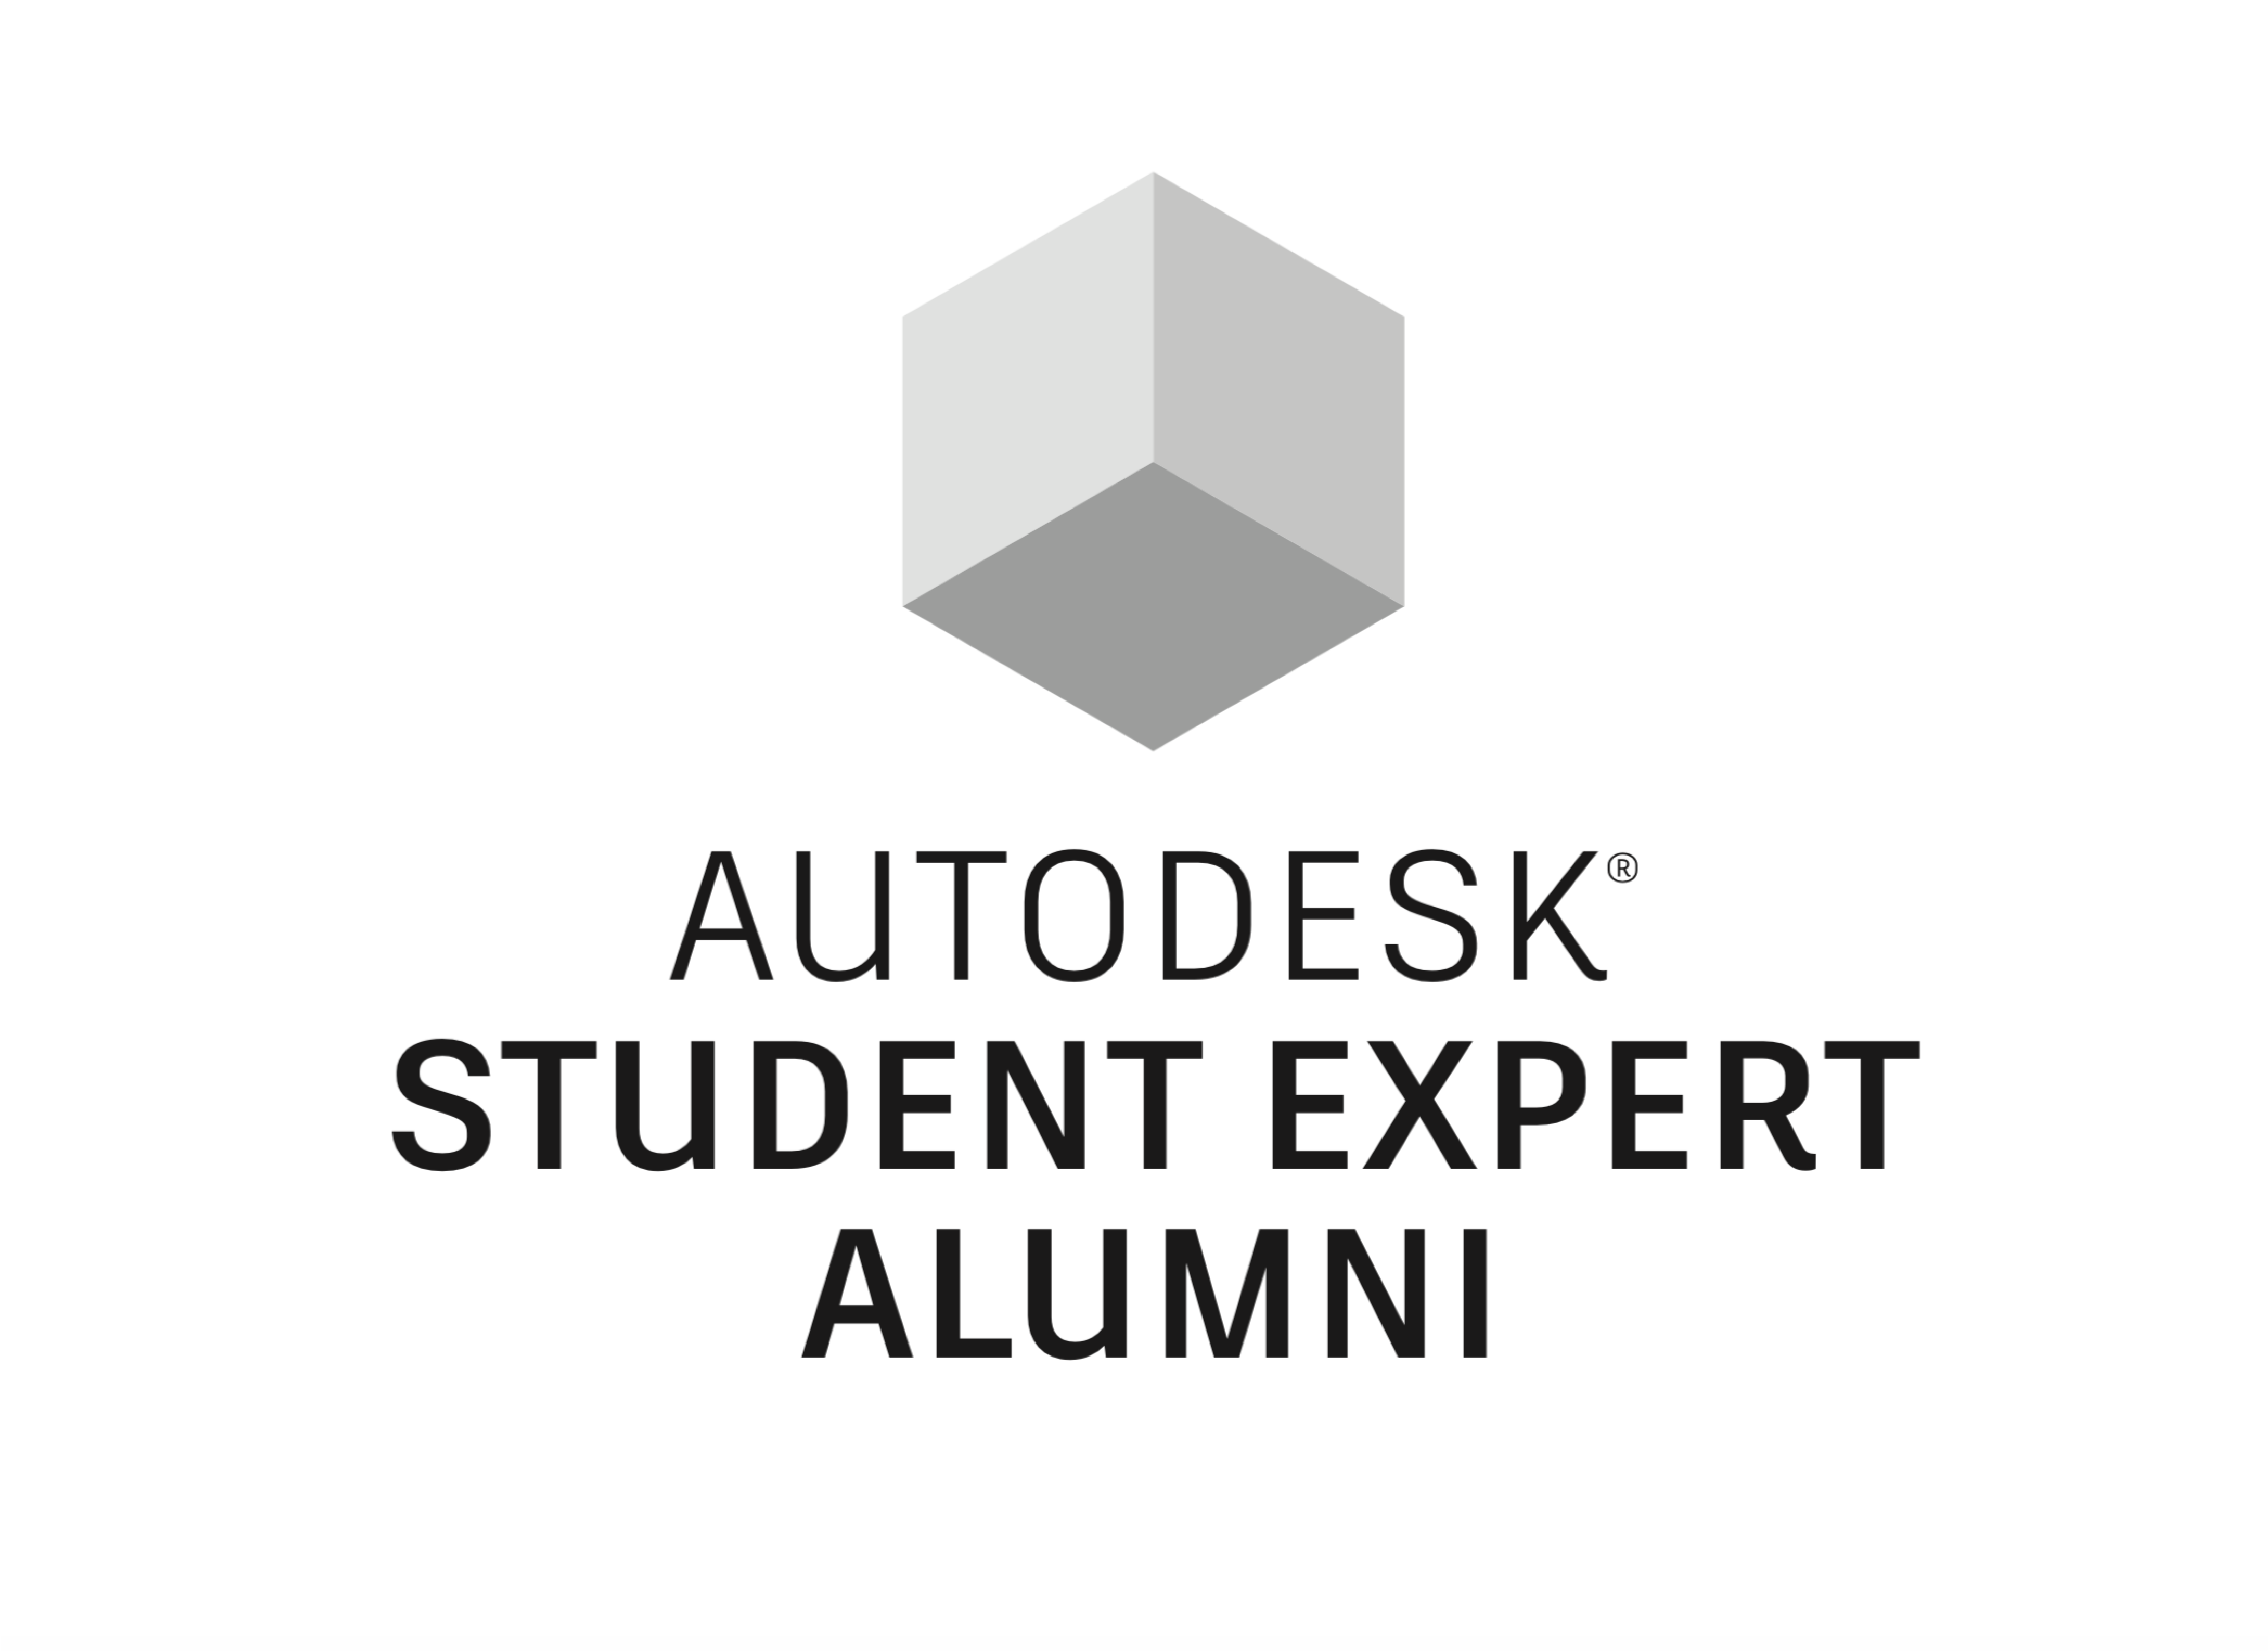 Autodesk Student Expert Alumni